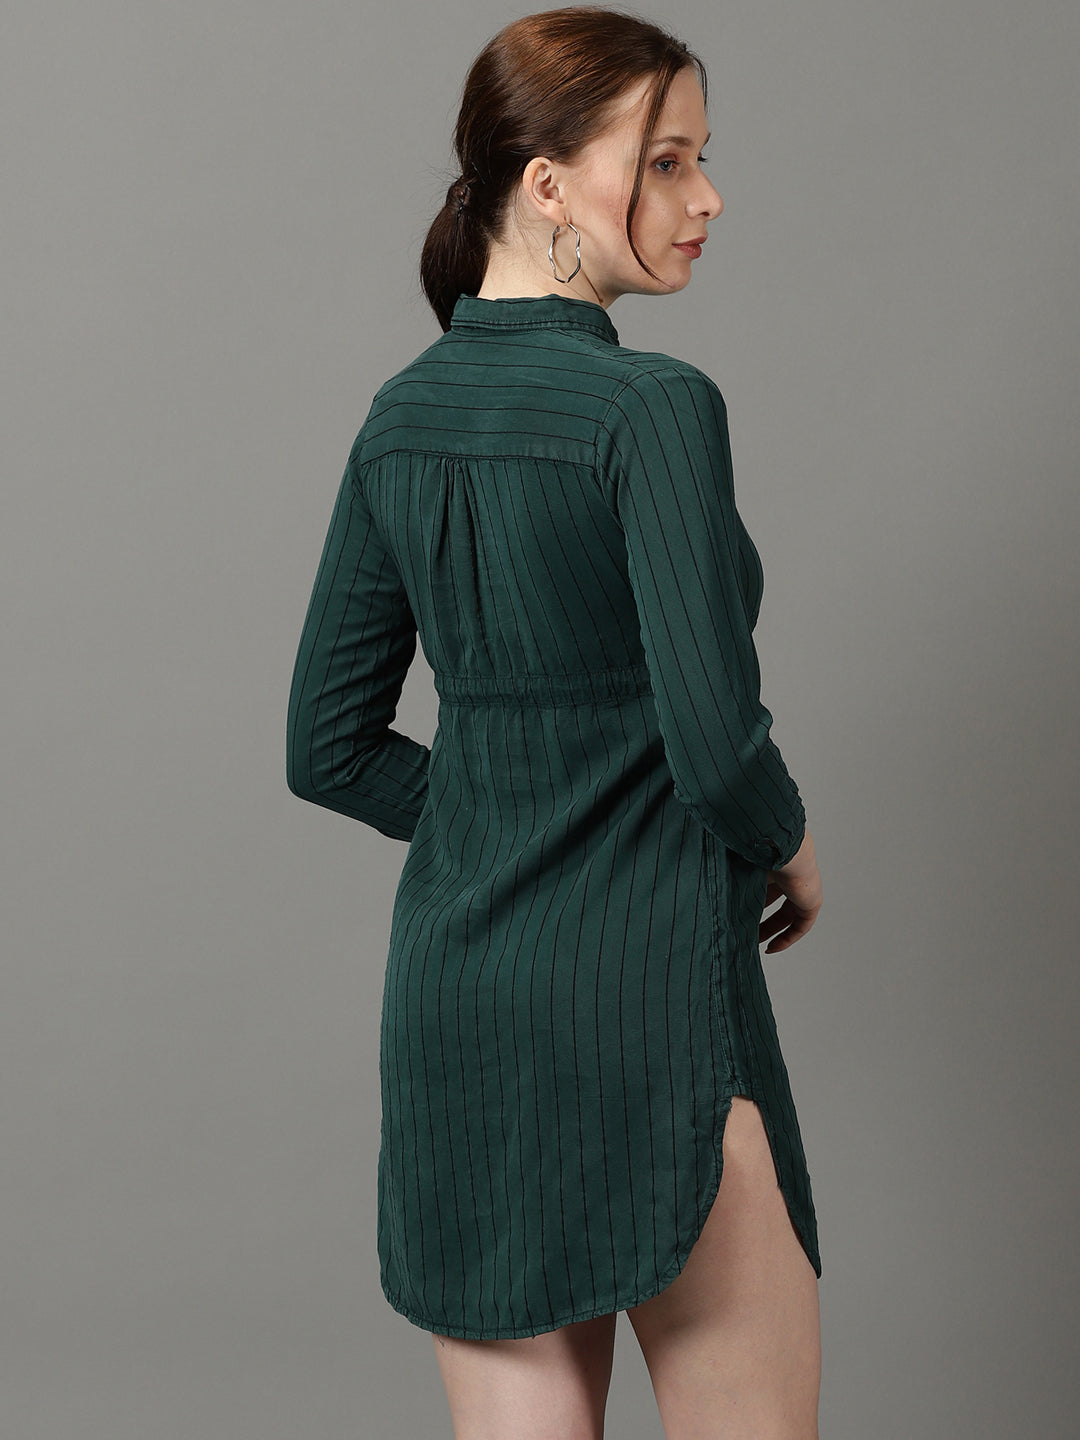 Women's Green Striped Shirt Style Longline Top